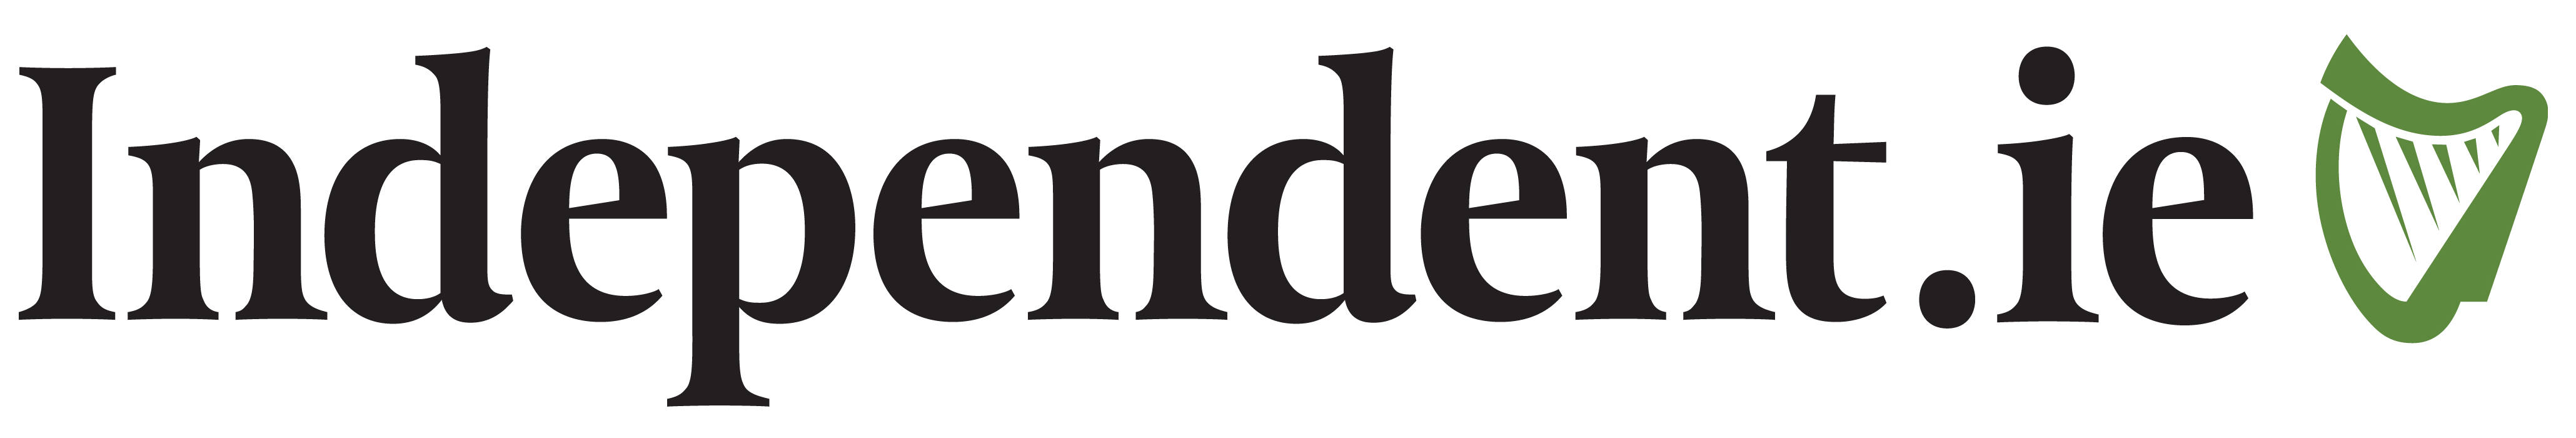 Irish_Independent_logo